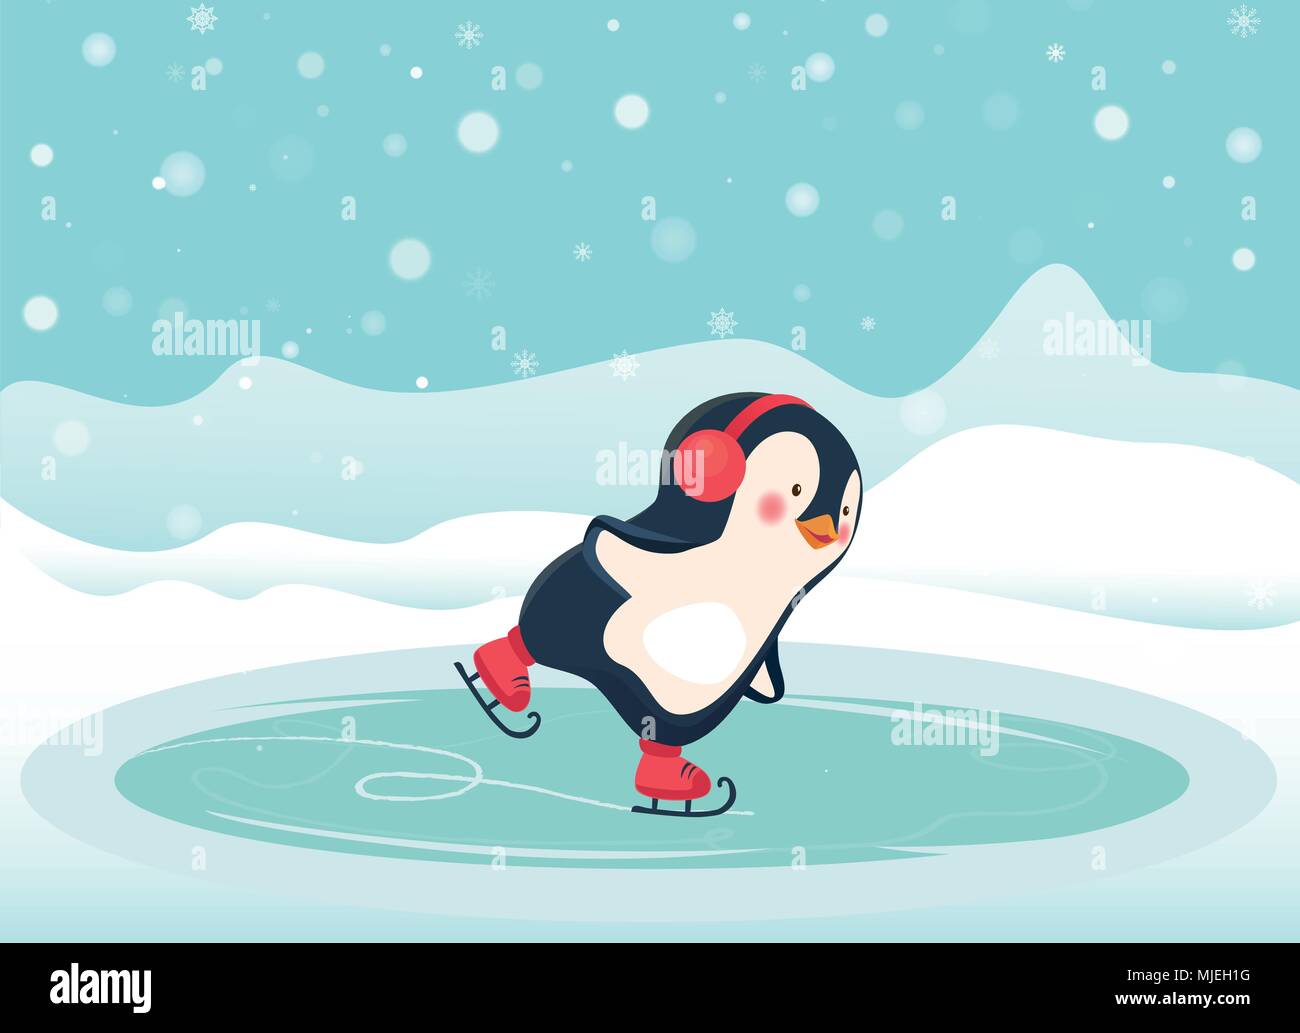 penguin skater cartoon Stock Vector